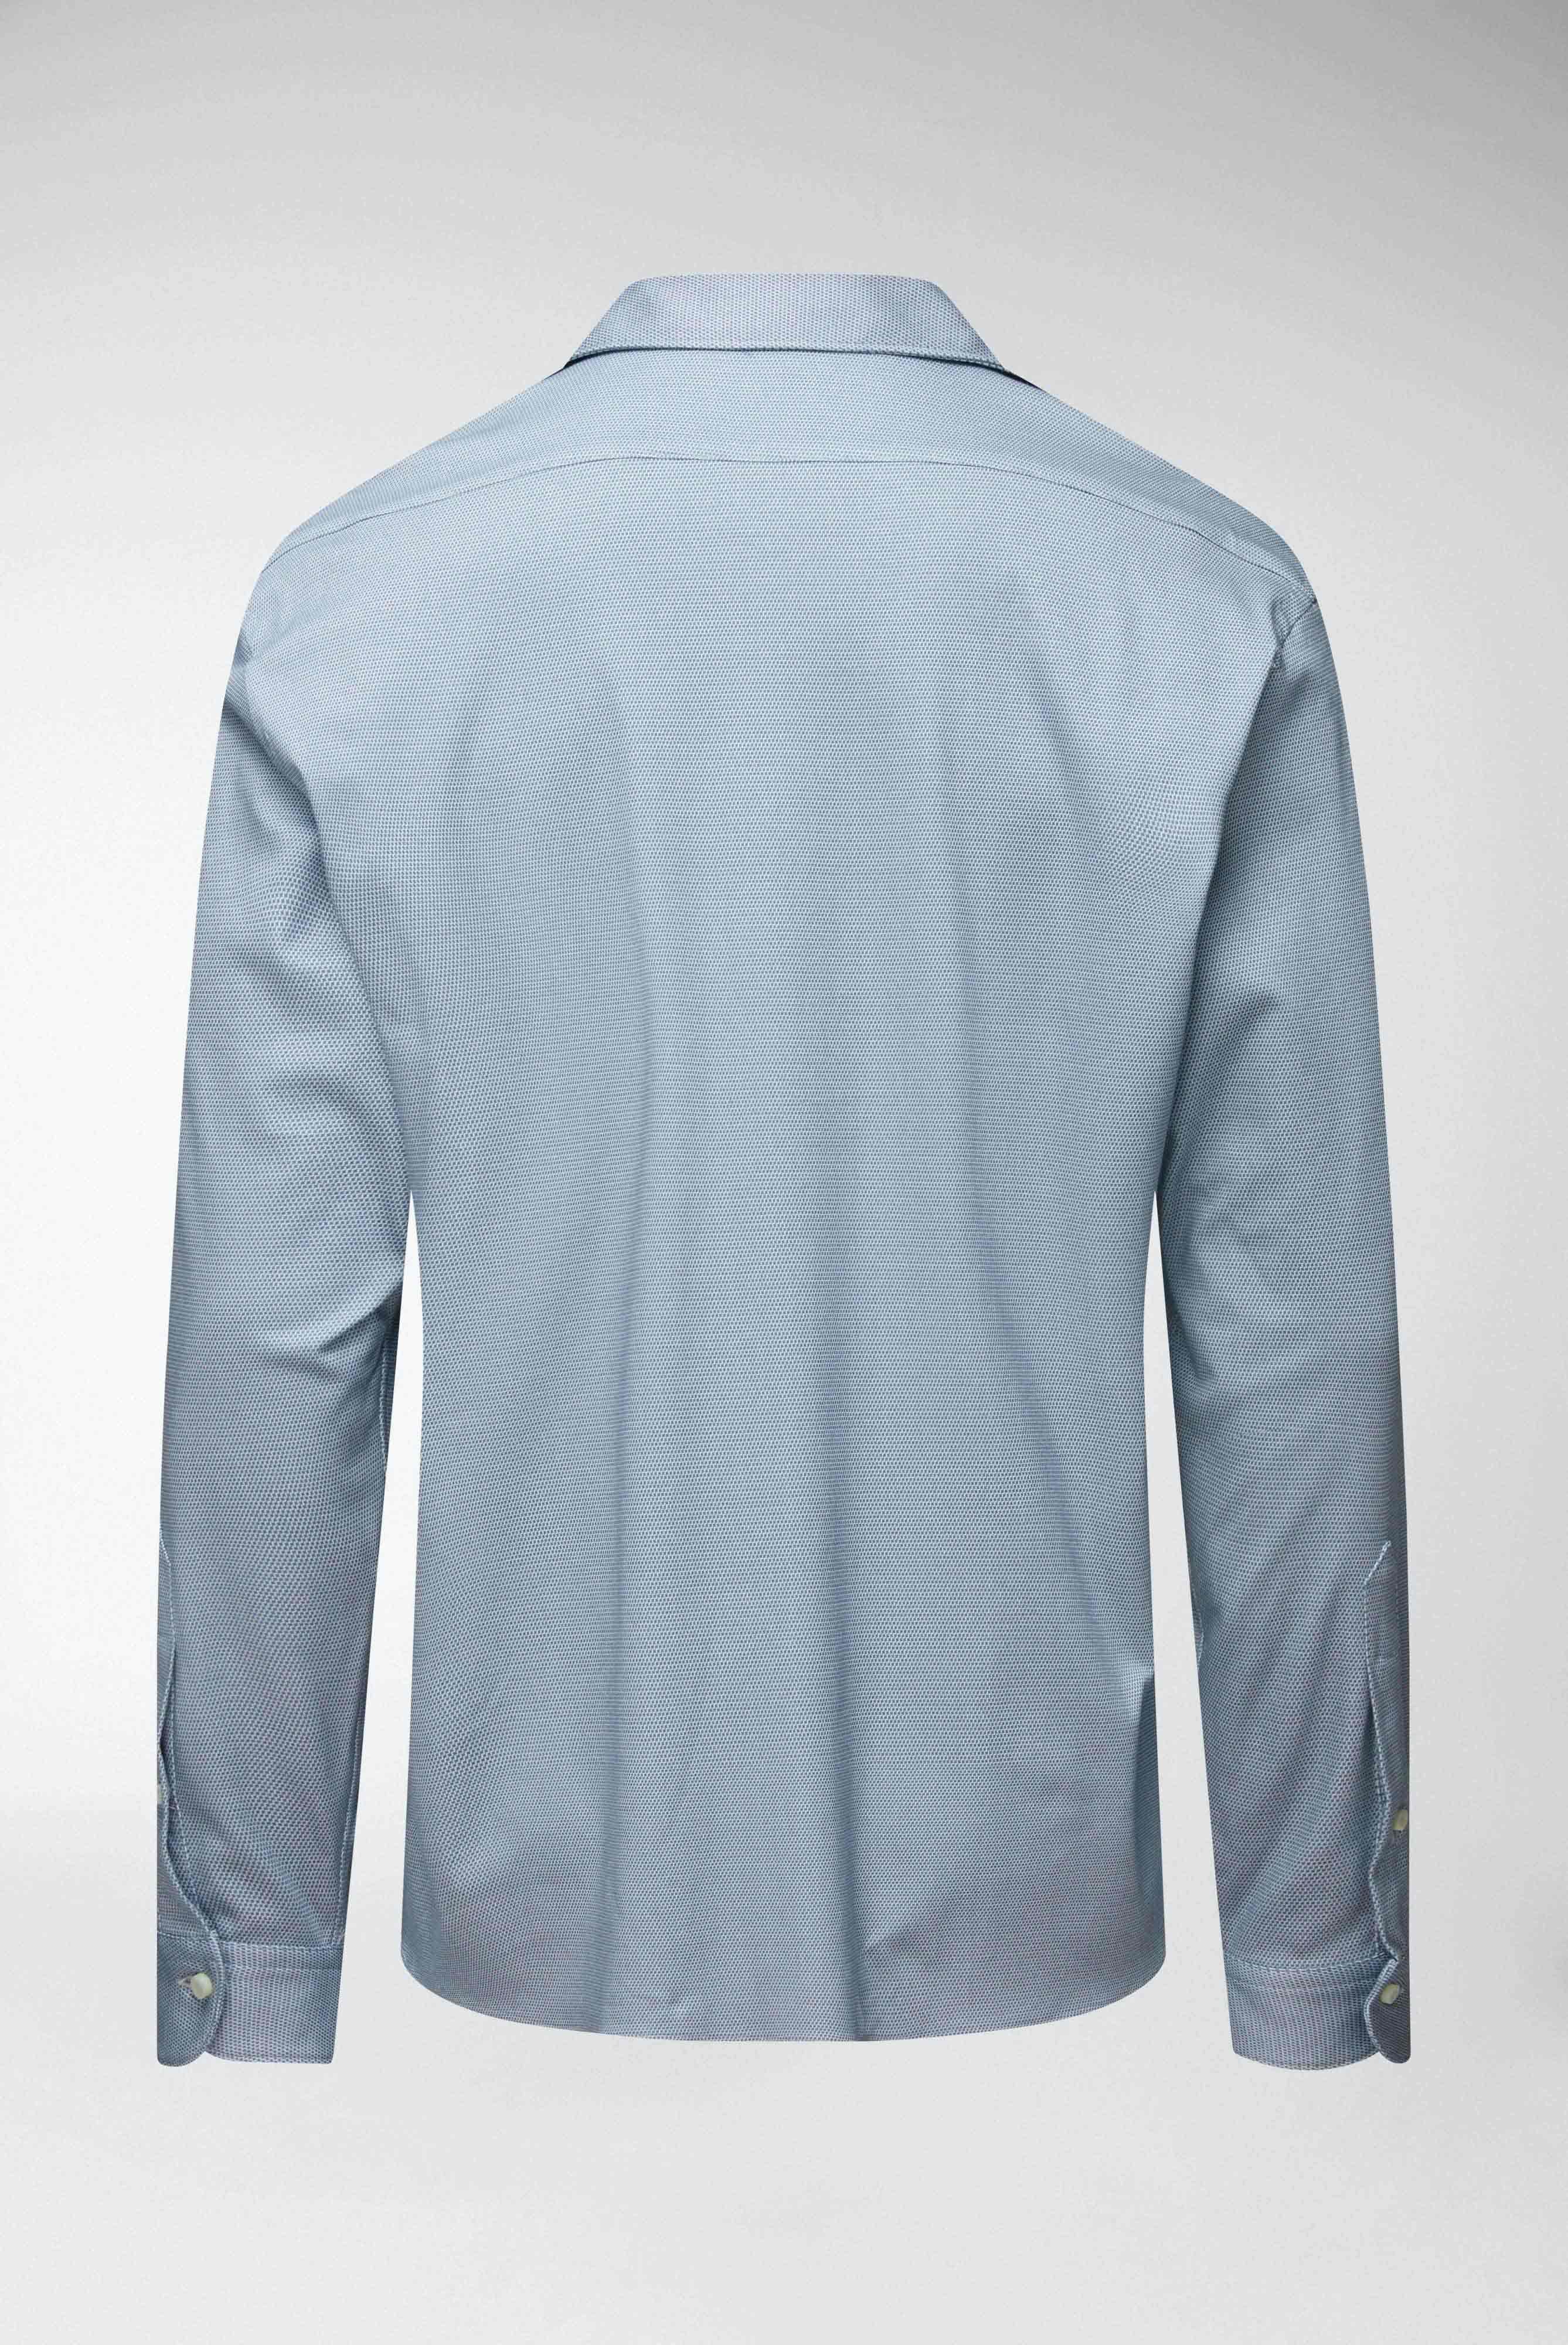 Casual Hemden+Jersey Hemd mit Mikro Druck Tailor Fit+20.1683.UC.187551.050.M